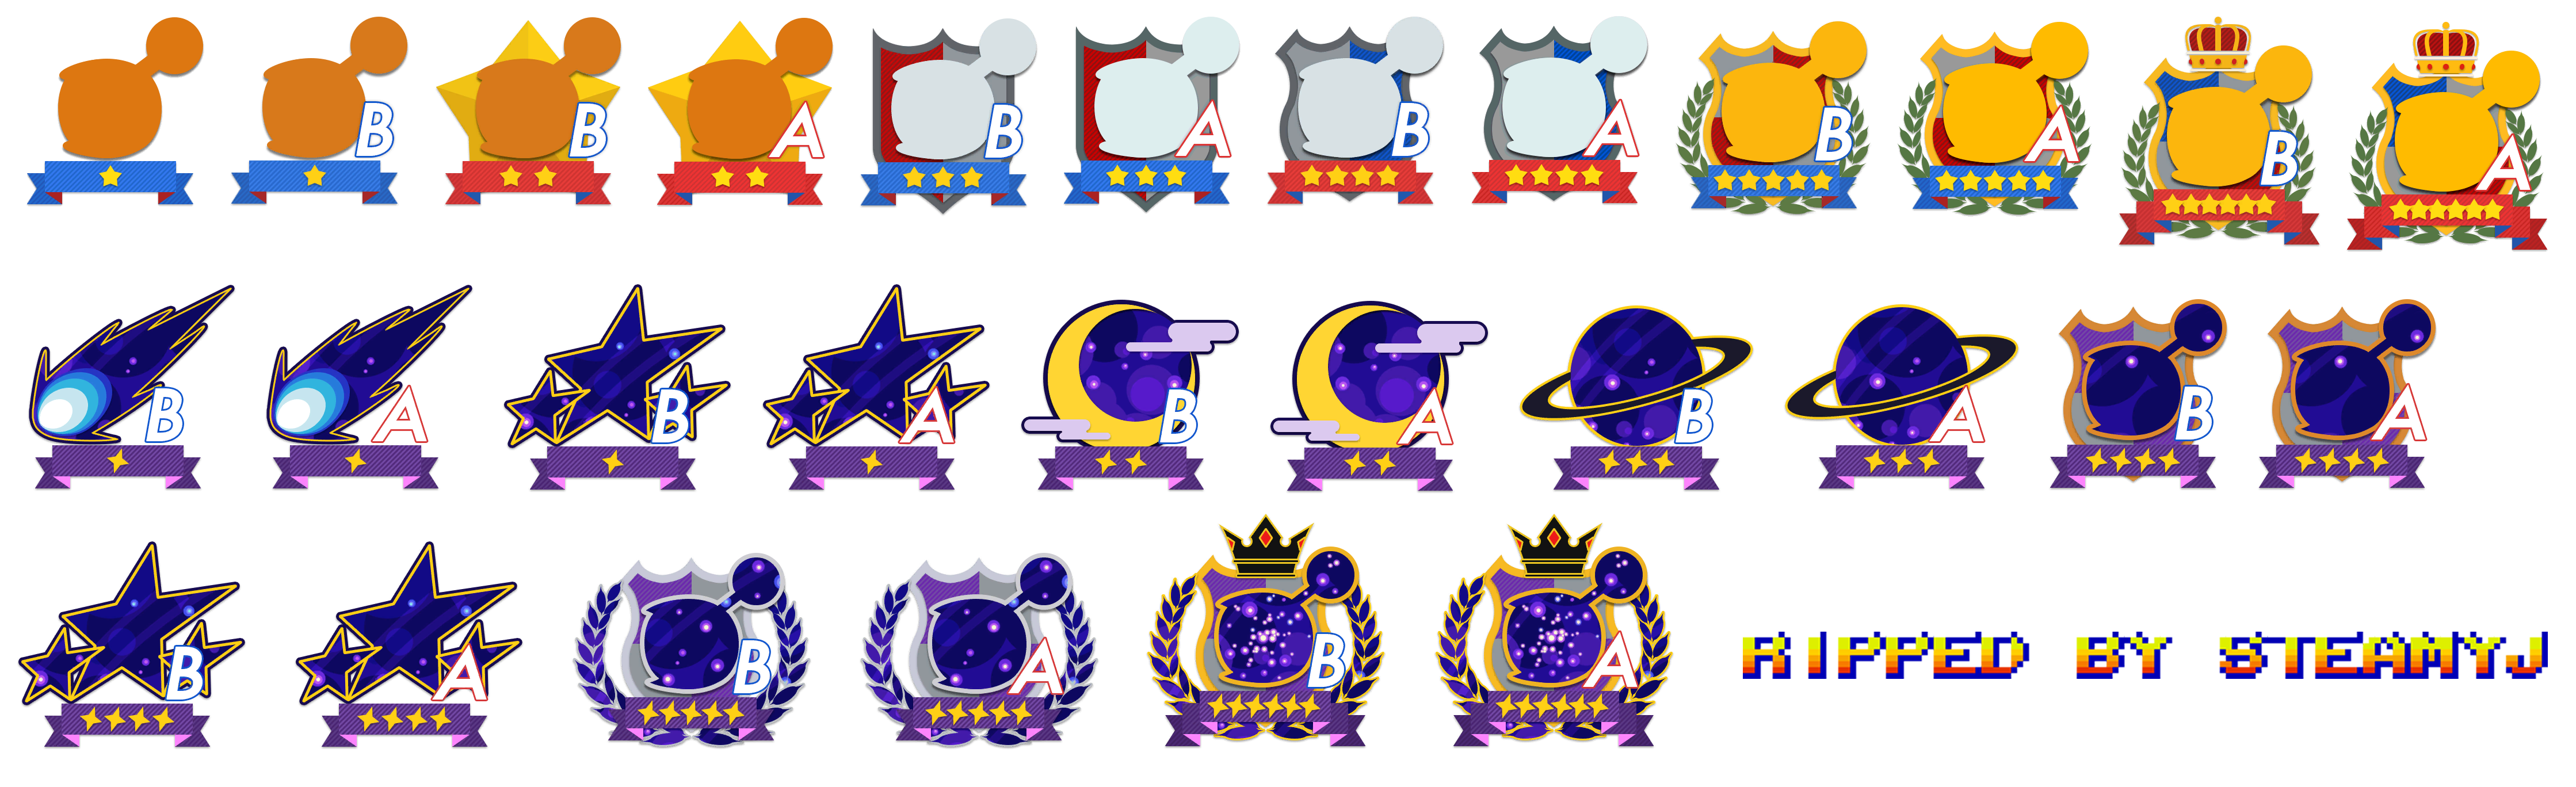 Super Bomberman R - Rank Icons